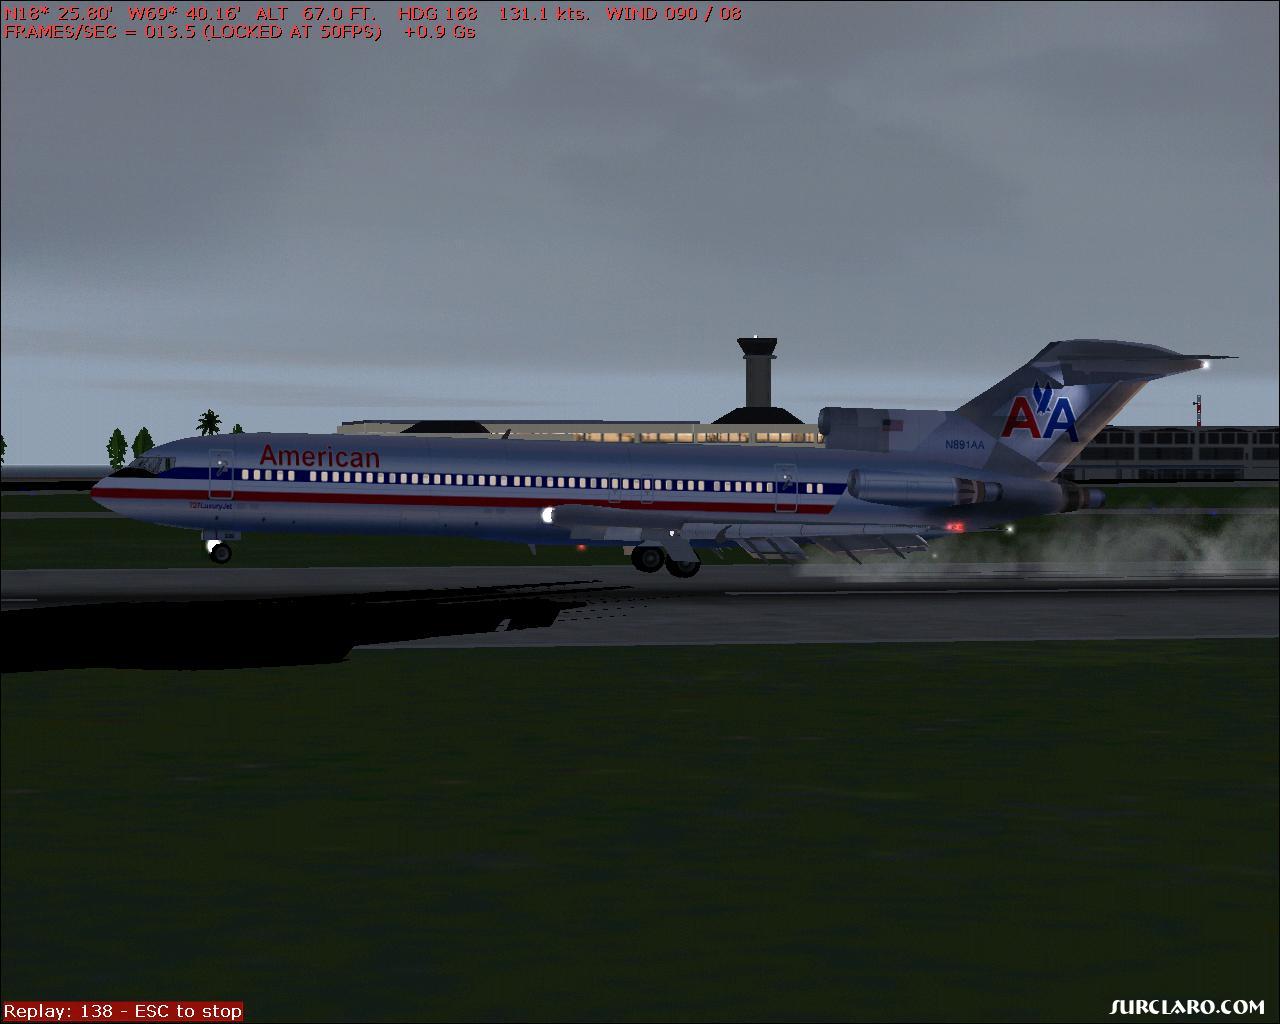 American's 727 lands at Dusk at Las Americas Intl. Airport in Santo Domingo, Dominican Republic. - Photo 569